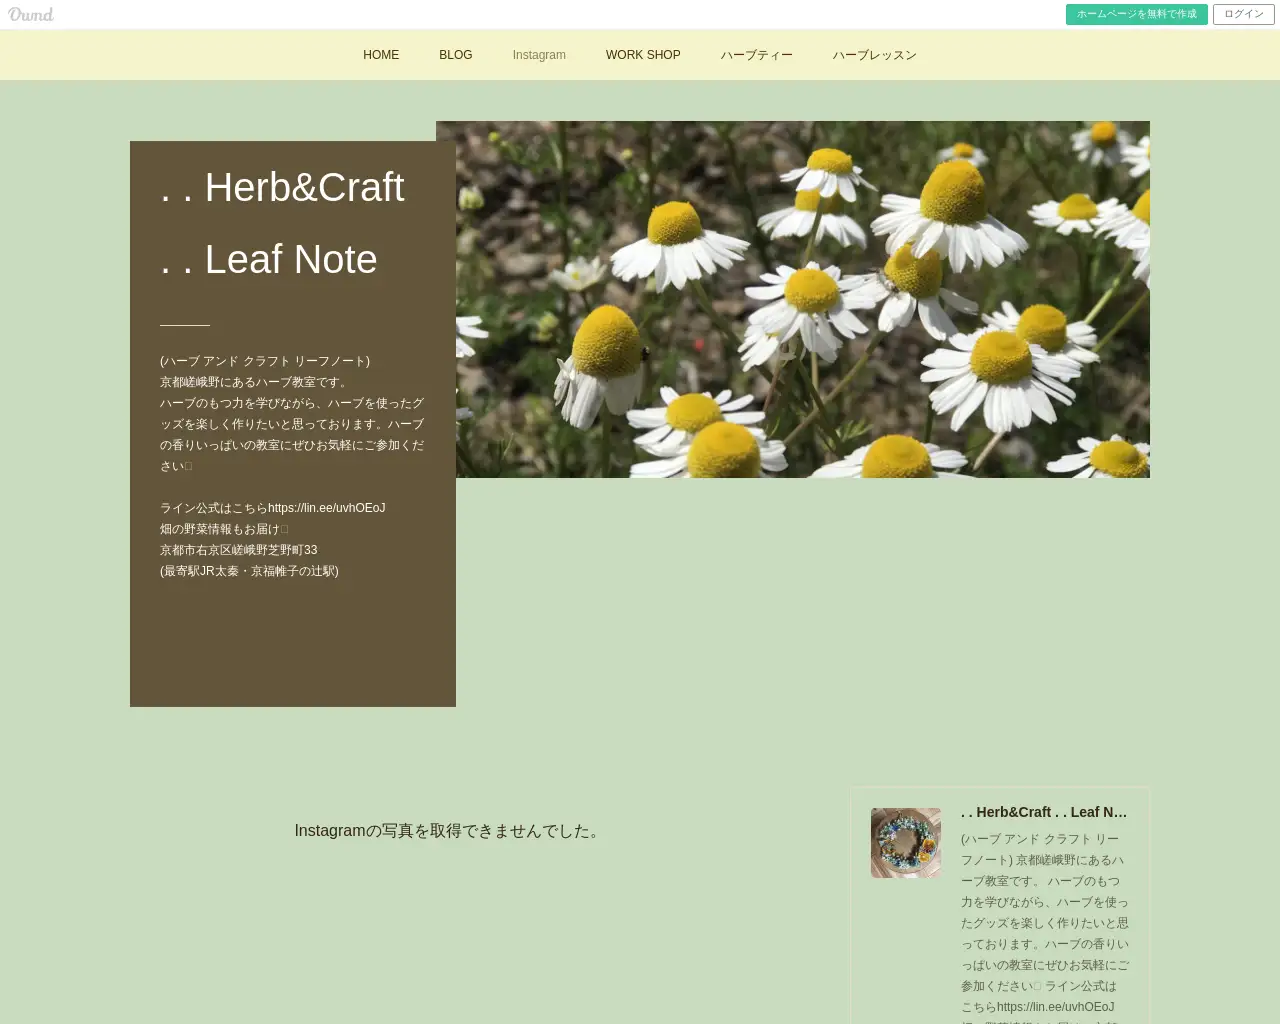 Herb&Craft Leaf Note site